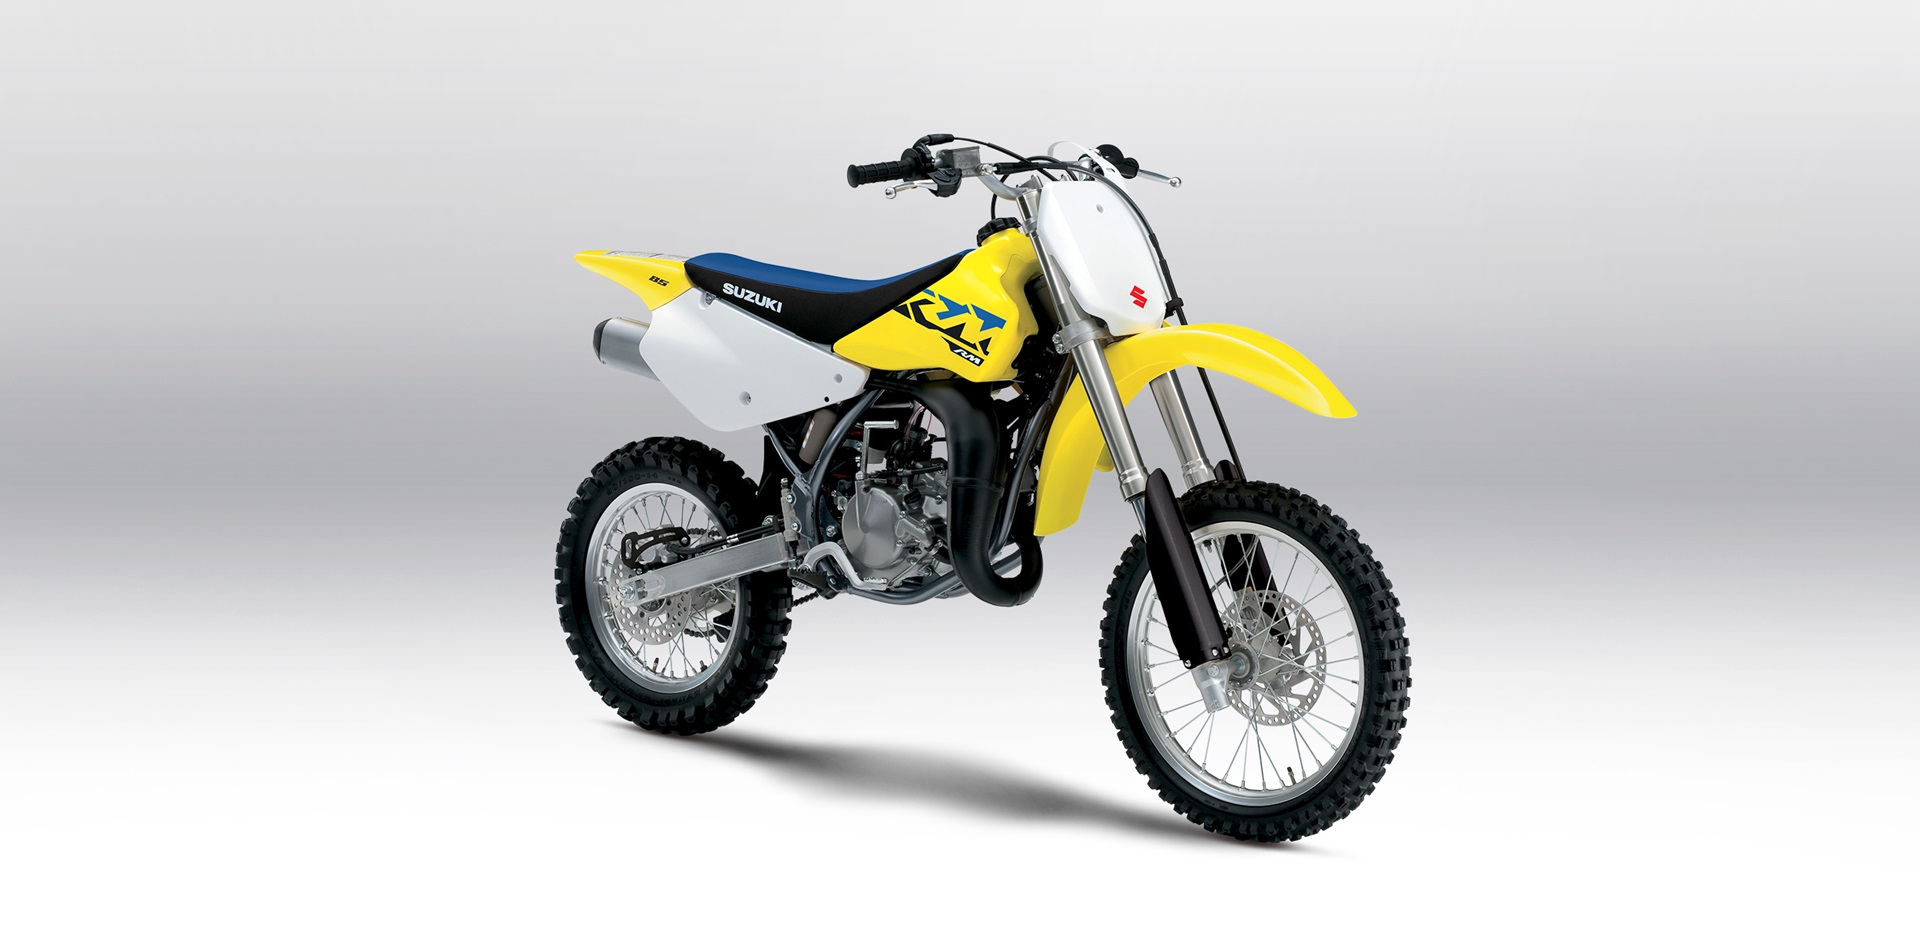 Suzuki RM85 motocross motorcycle for sale